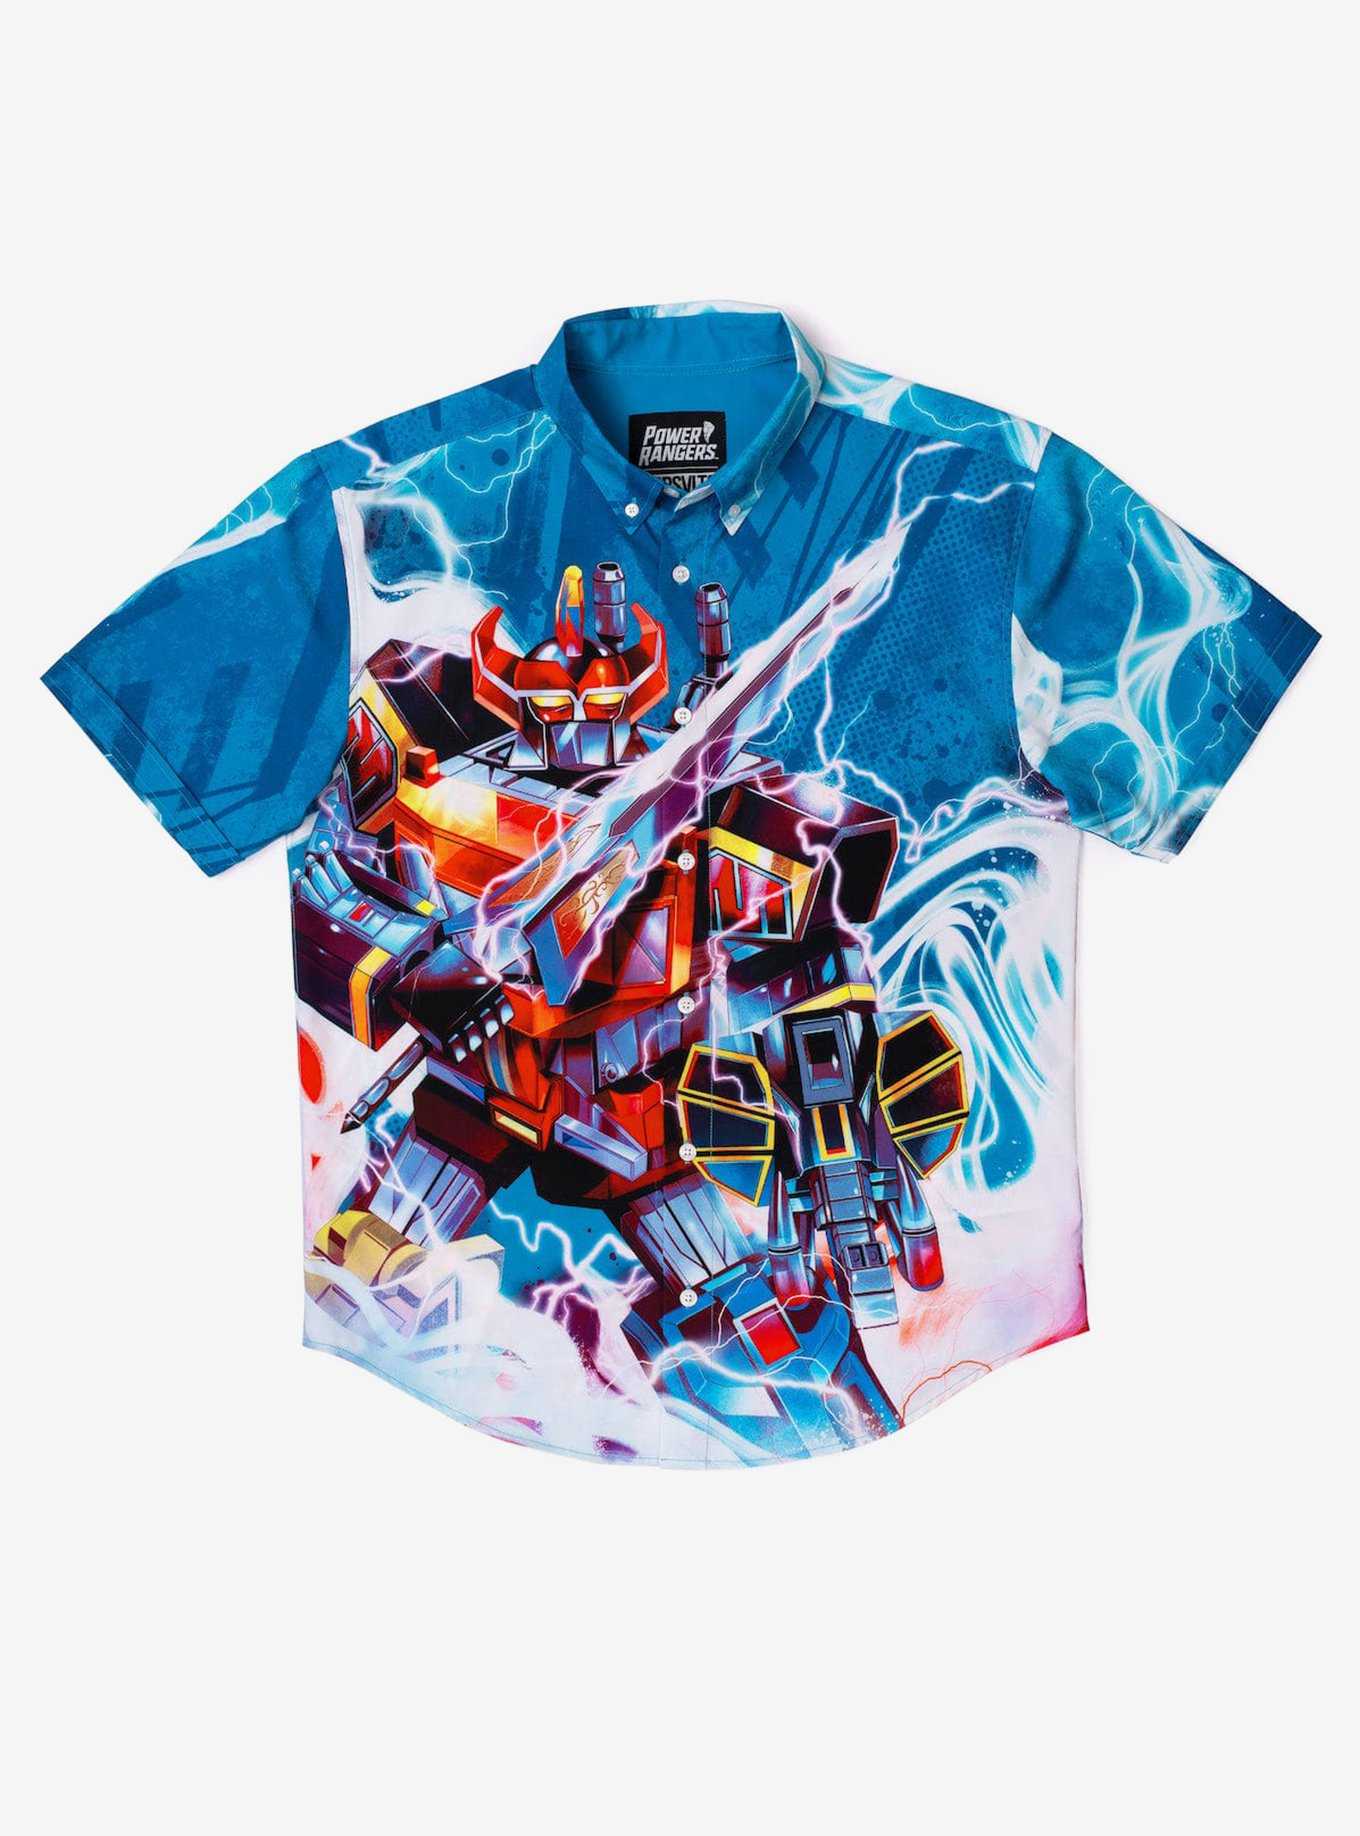 RSVLTS Mighty Morphin' Power Rangers "Megazord" Button-Up Shirt, , hi-res